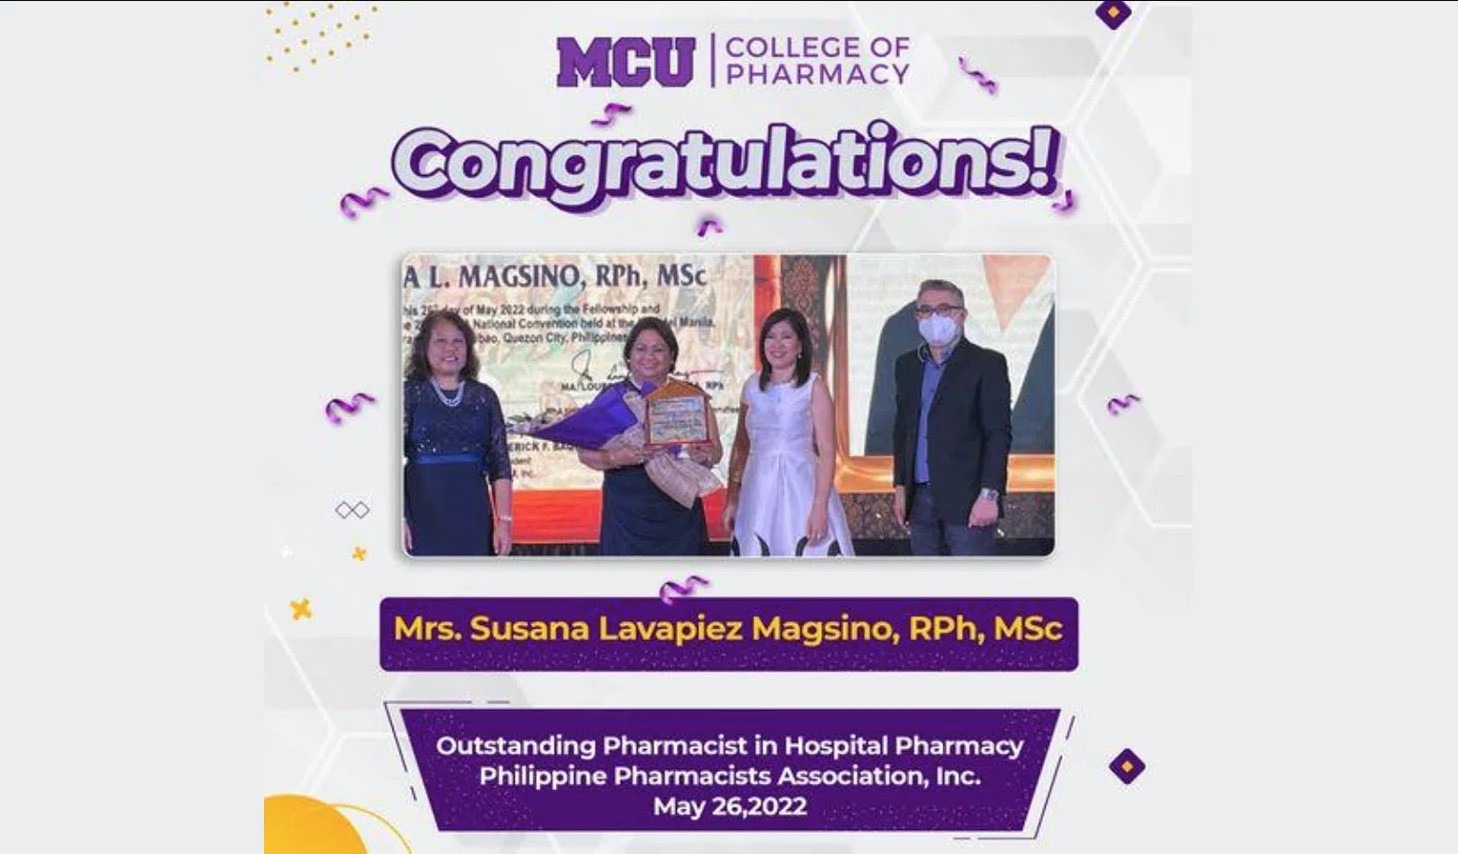 Mrs. Susana Lavapiez Magsino, RPh, MSC obtained an award